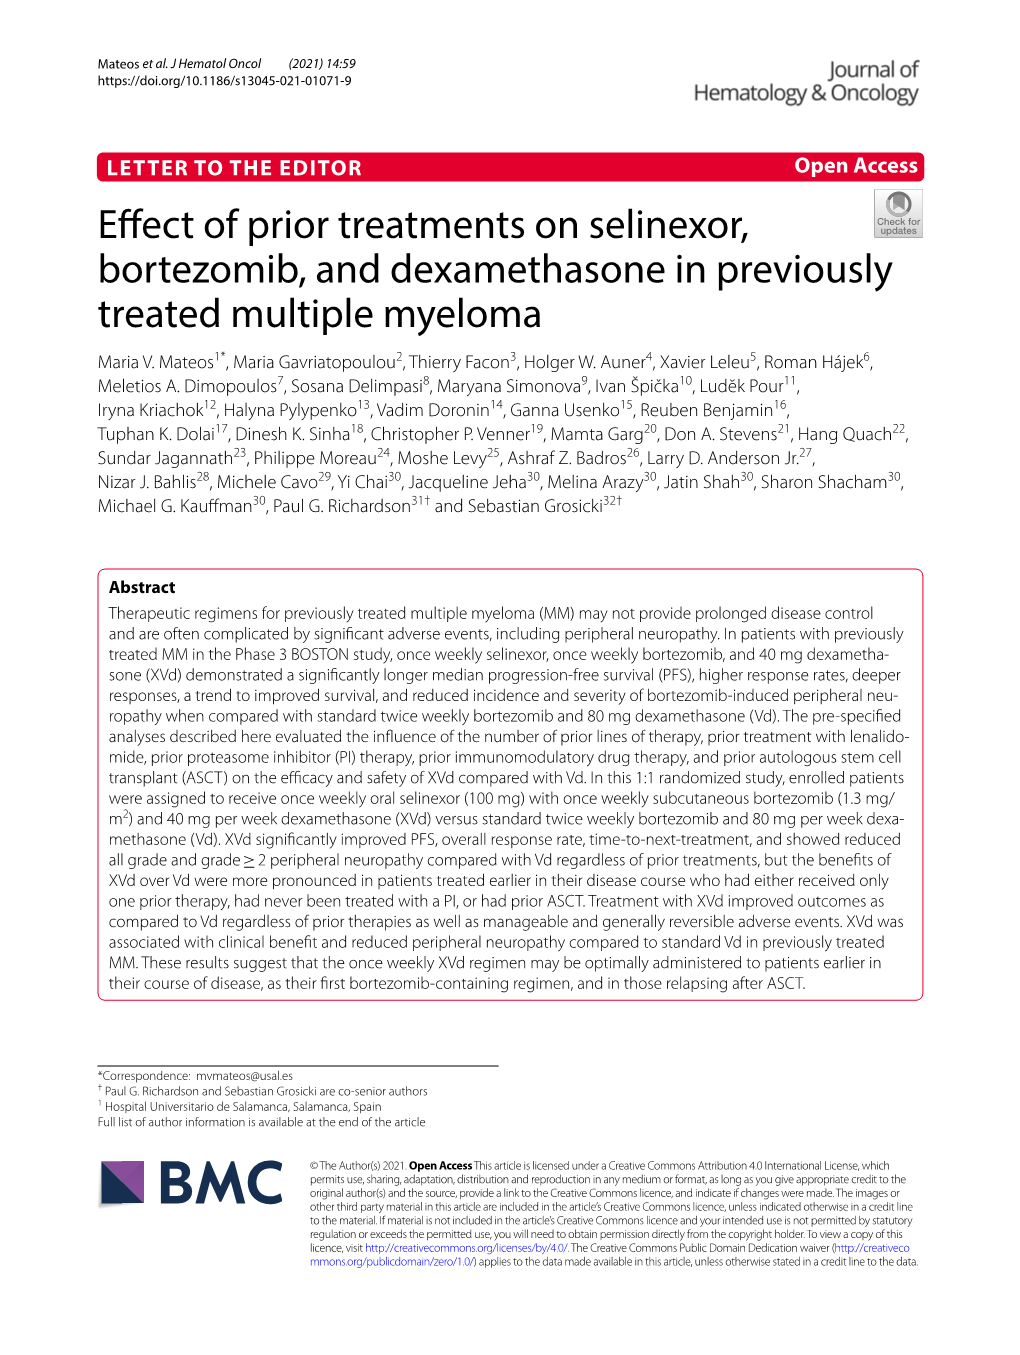 Effect of Prior Treatments on Selinexor, Bortezomib, and Dexamethasone In